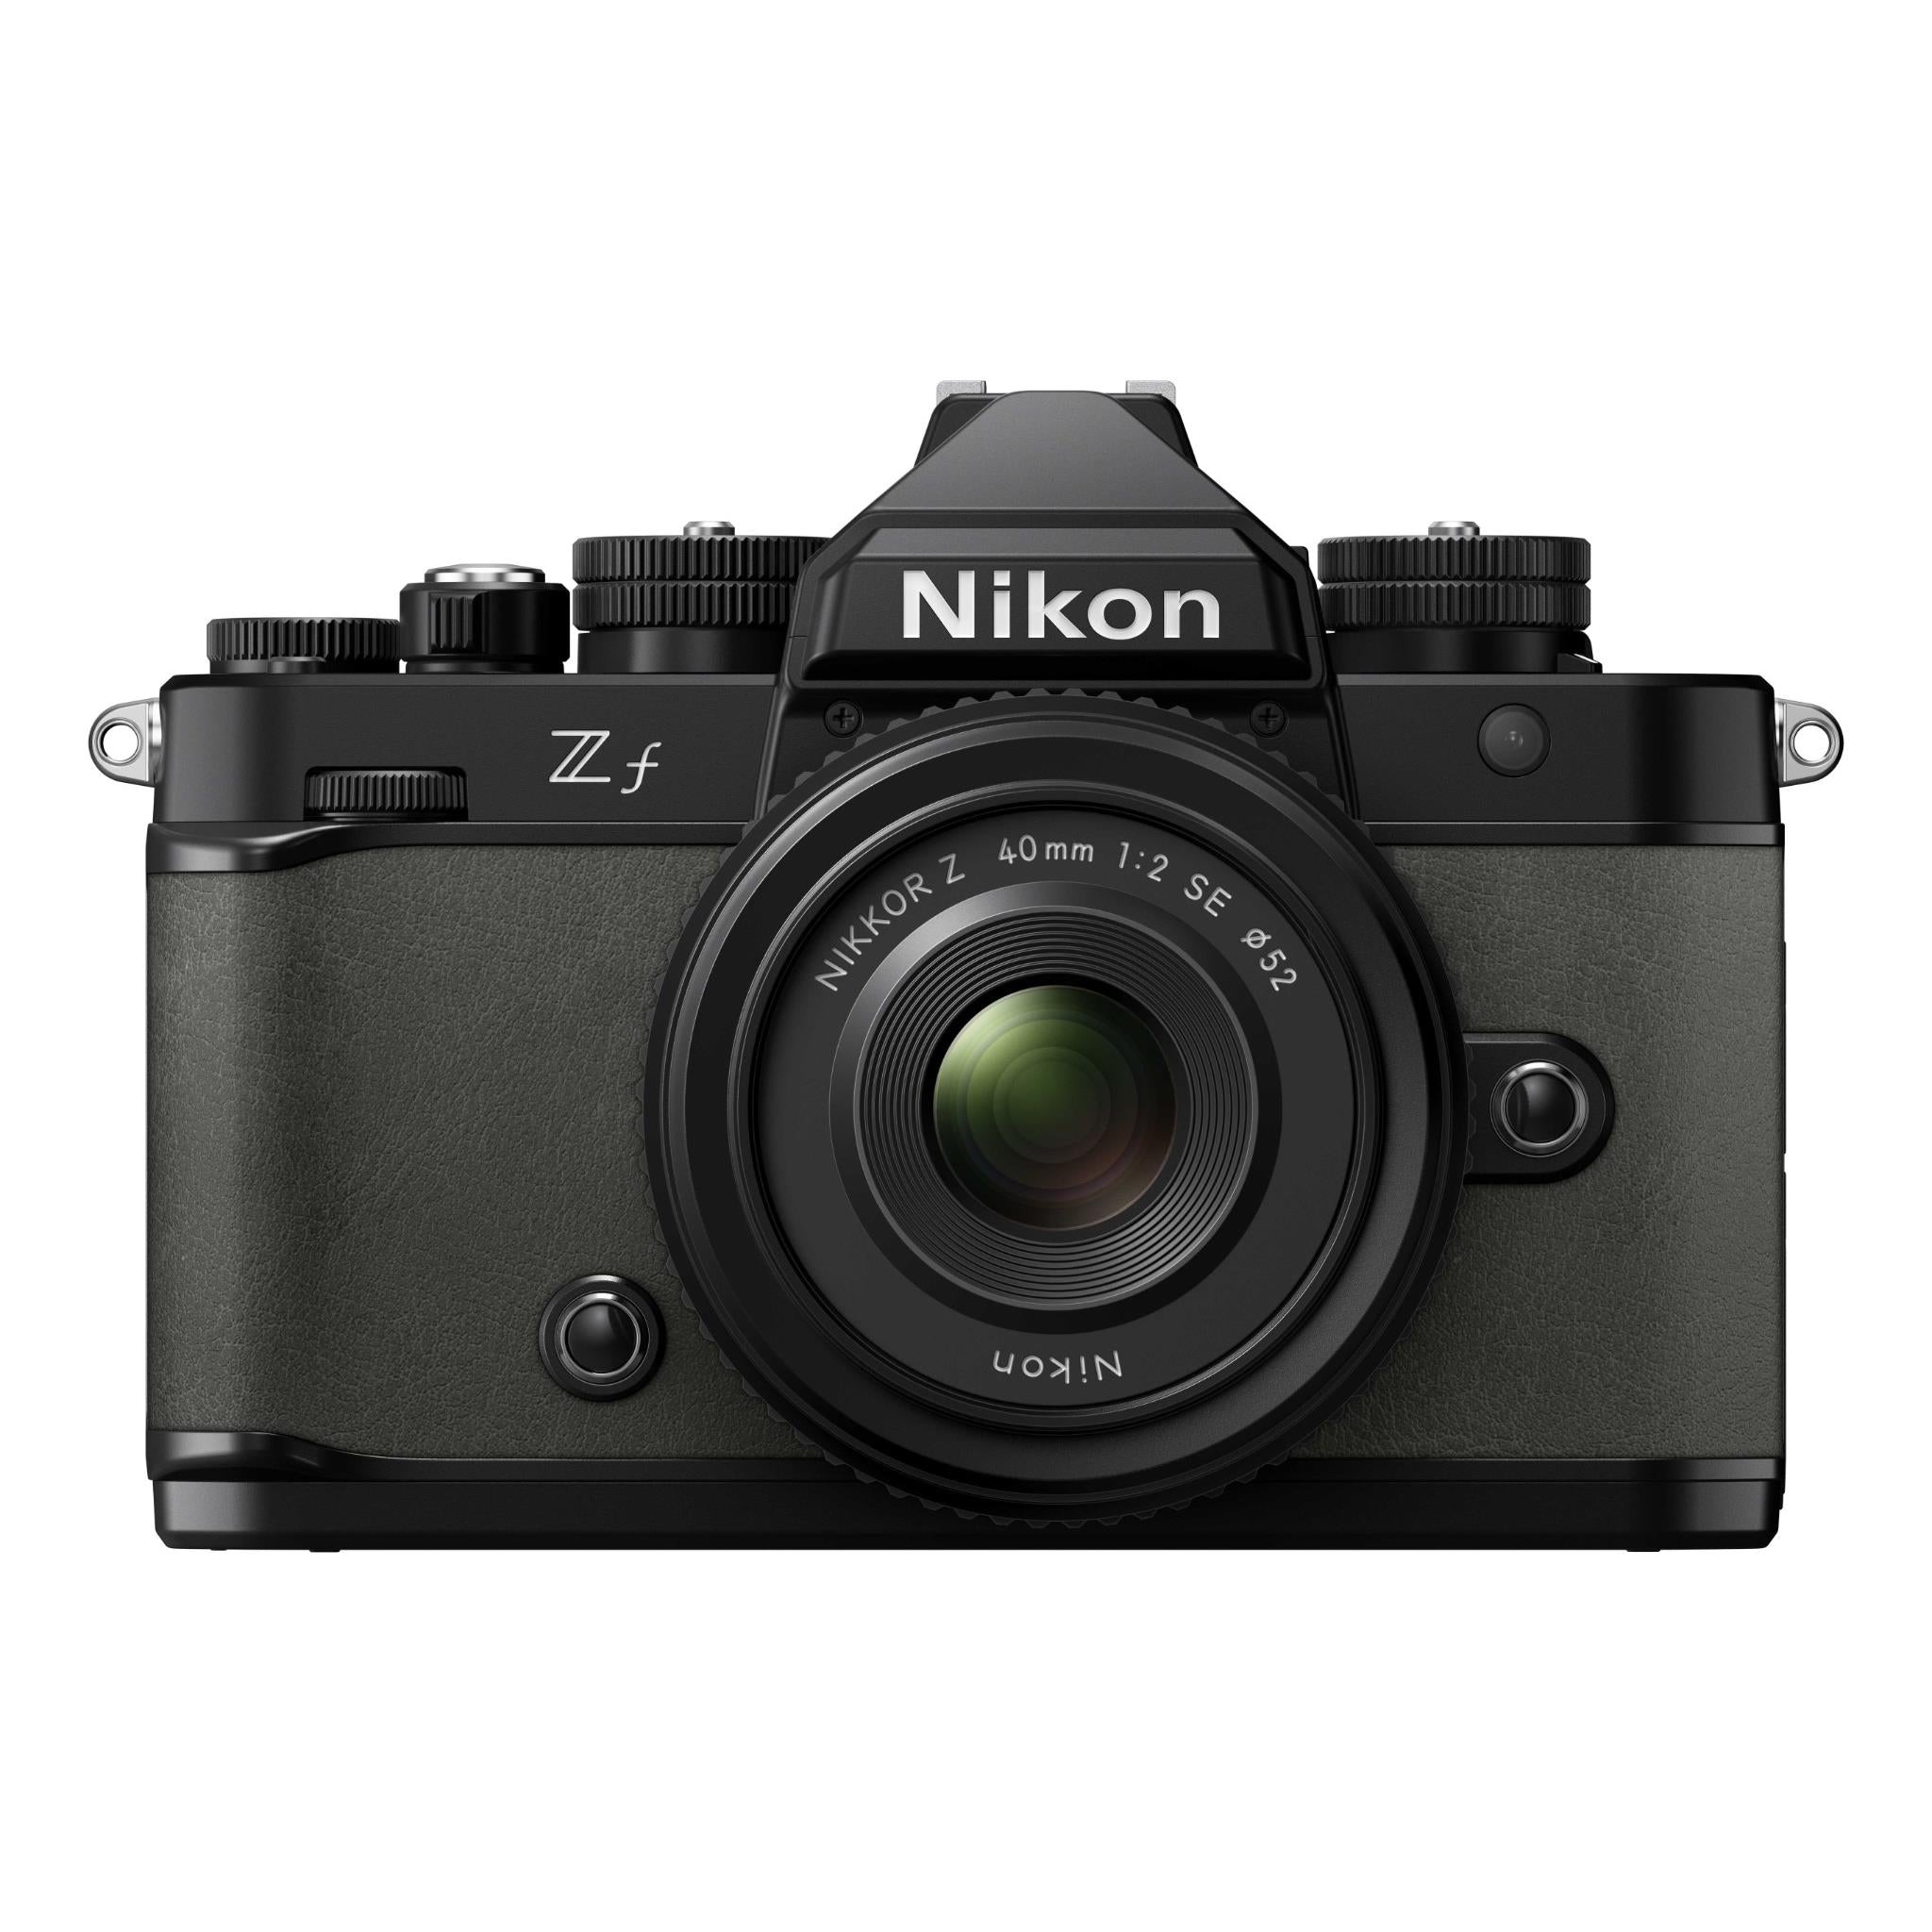 nikon z f full frame mirrorless camera with nikkor z 40mm lens (stone grey)